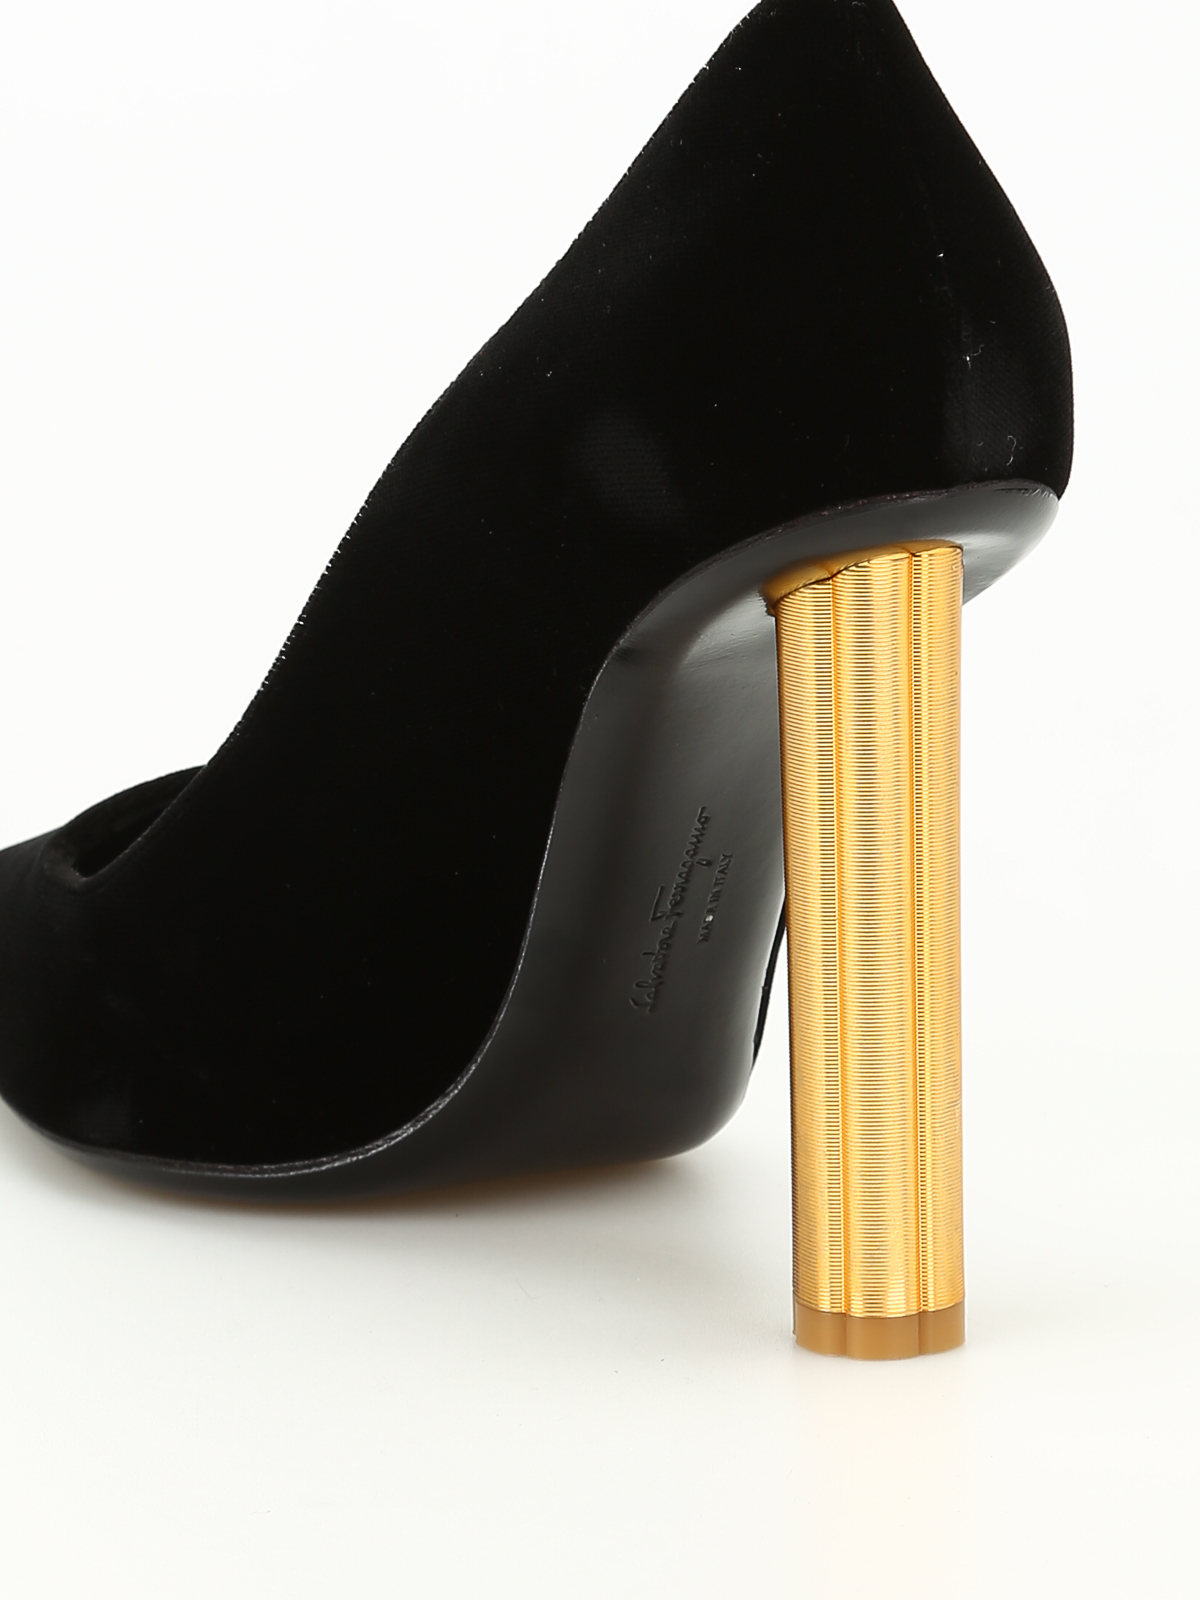 Buy black shoes gold heel cheap online